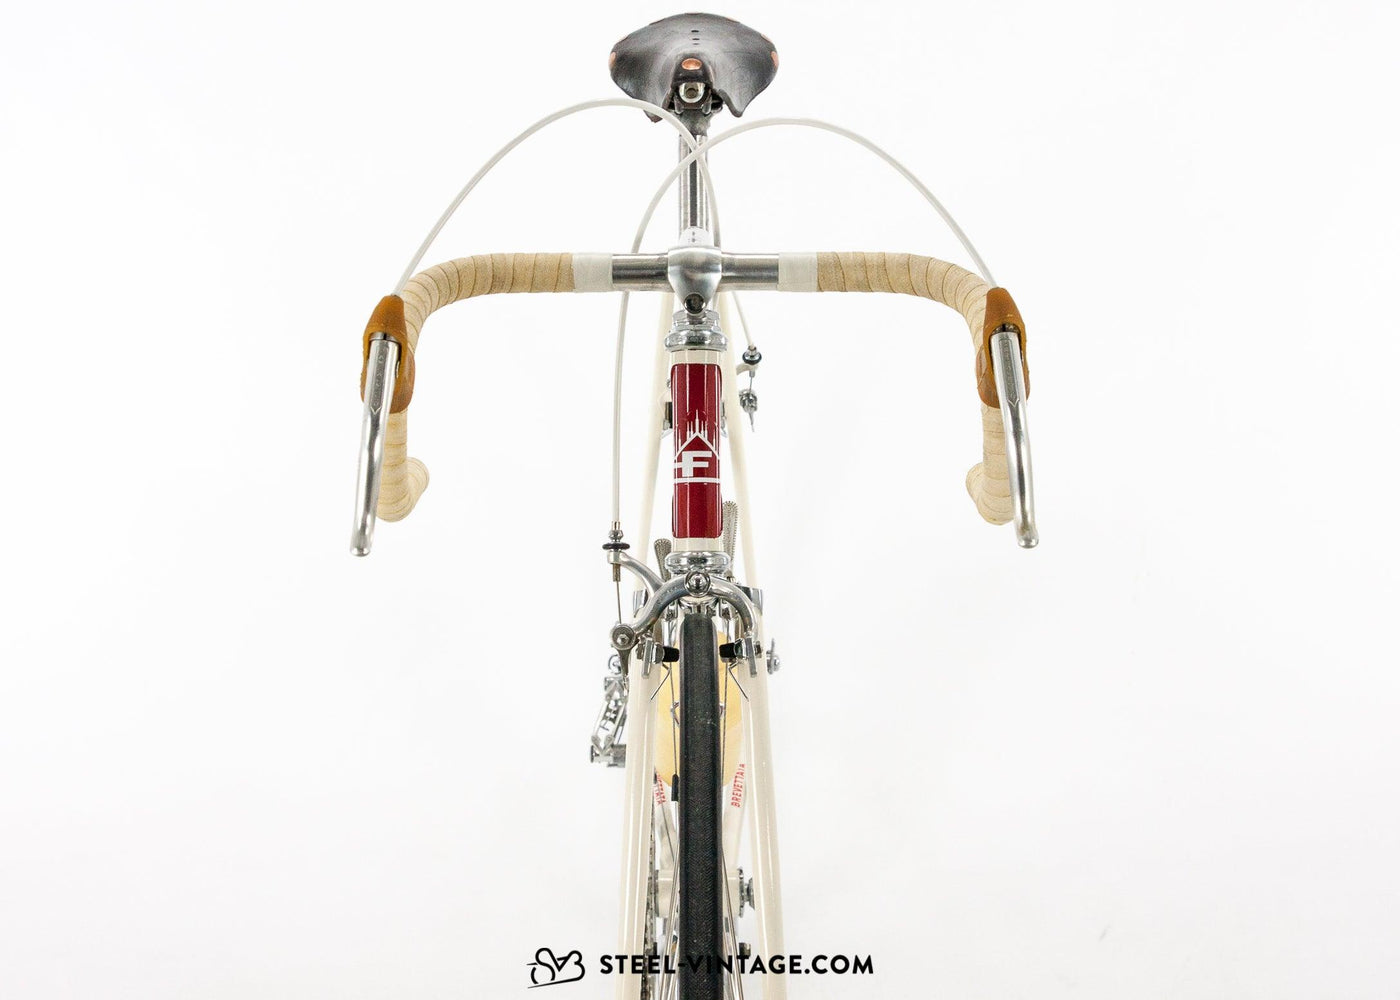 Faema Team Bike by Pelà 1969 - Steel Vintage Bikes